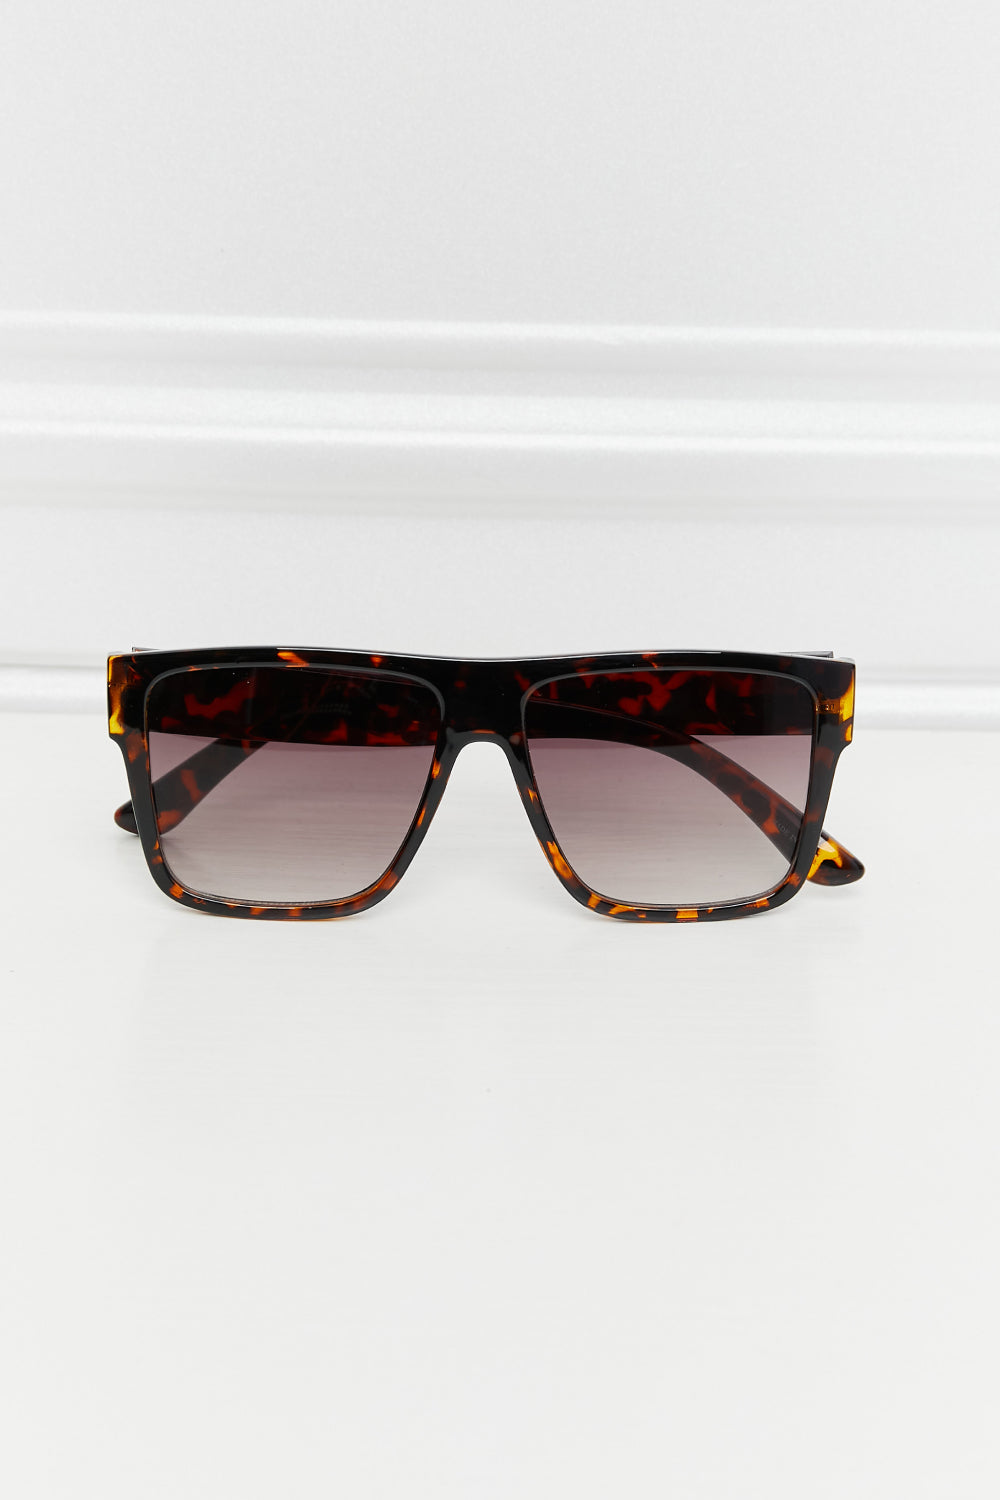 Tortoiseshell Square Full Rim Sunglasses Tangerine One Size Sunglasses by Vim&Vigor | Vim&Vigor Boutique